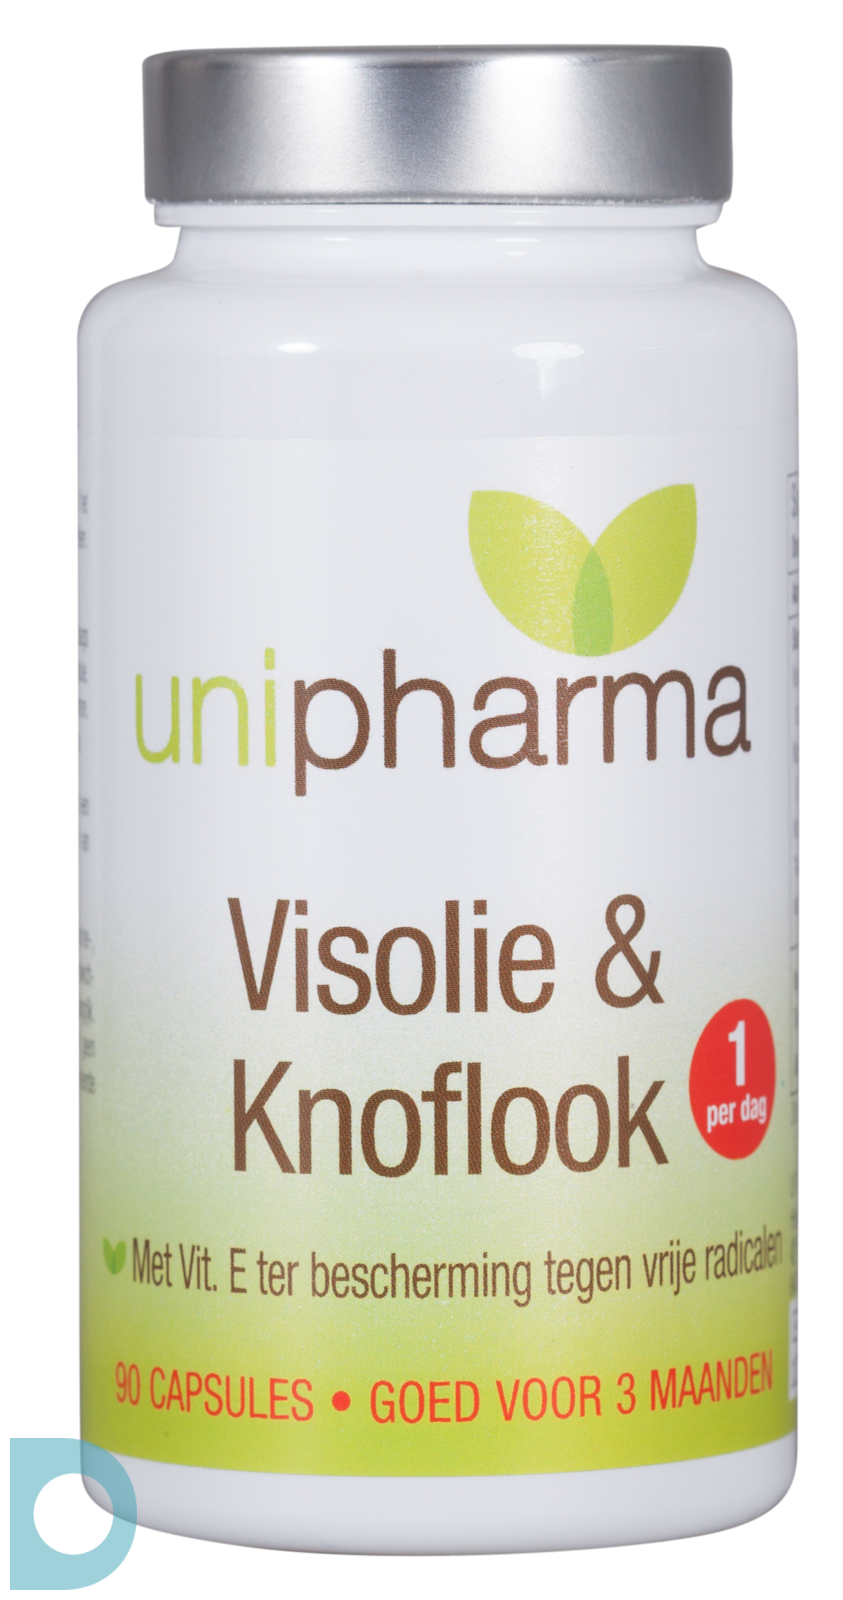 Unipharma Visolie & Knoflook De Drogist.